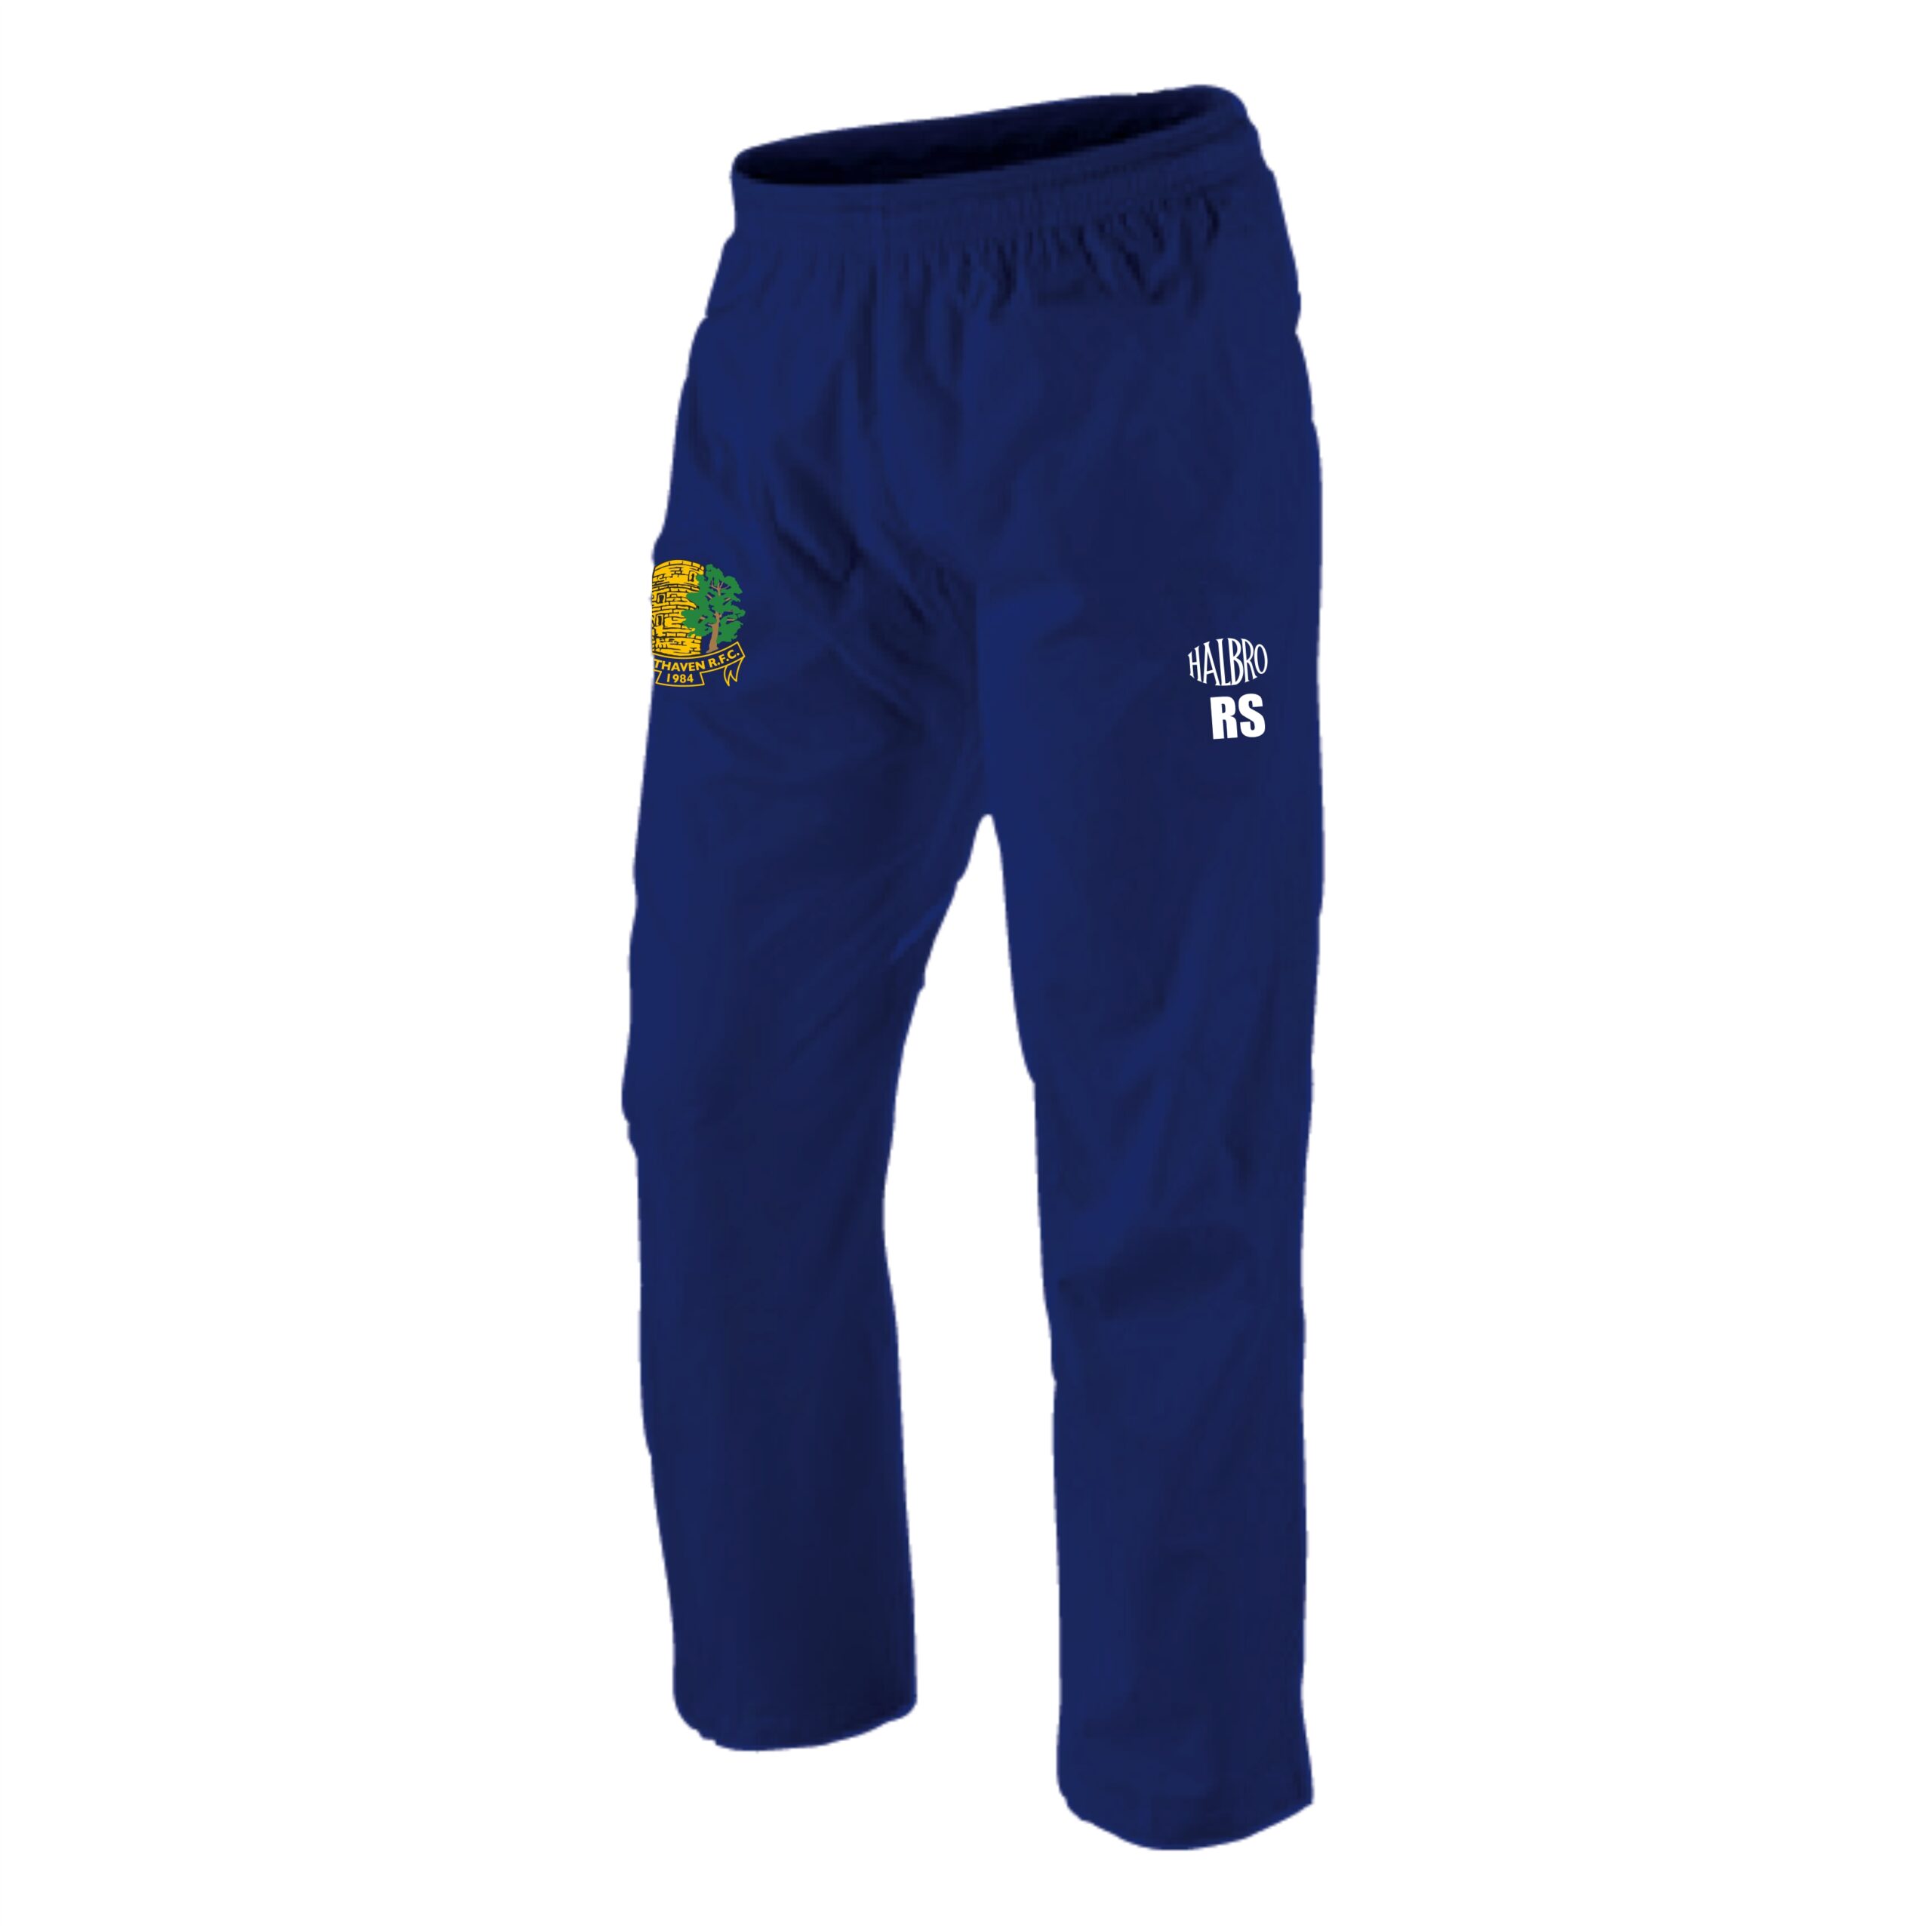 Strathaven RFC Seniors Arena Pants - Halbro Sportswear Limited